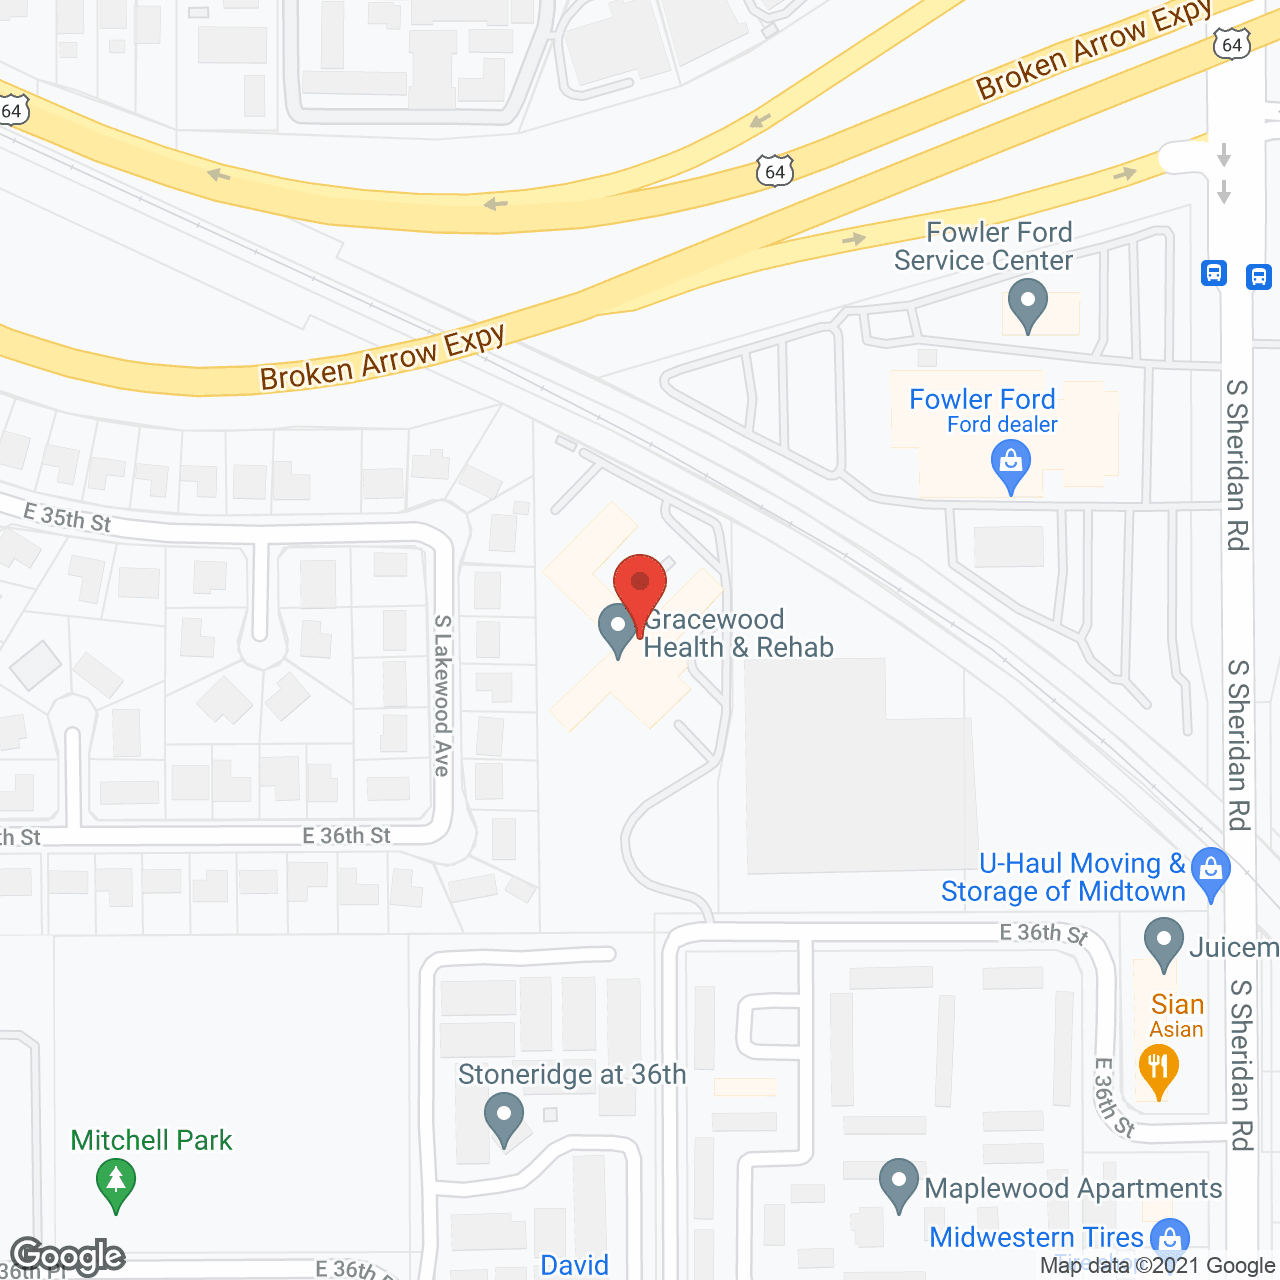 Tulsa Christian Care Ctr in google map